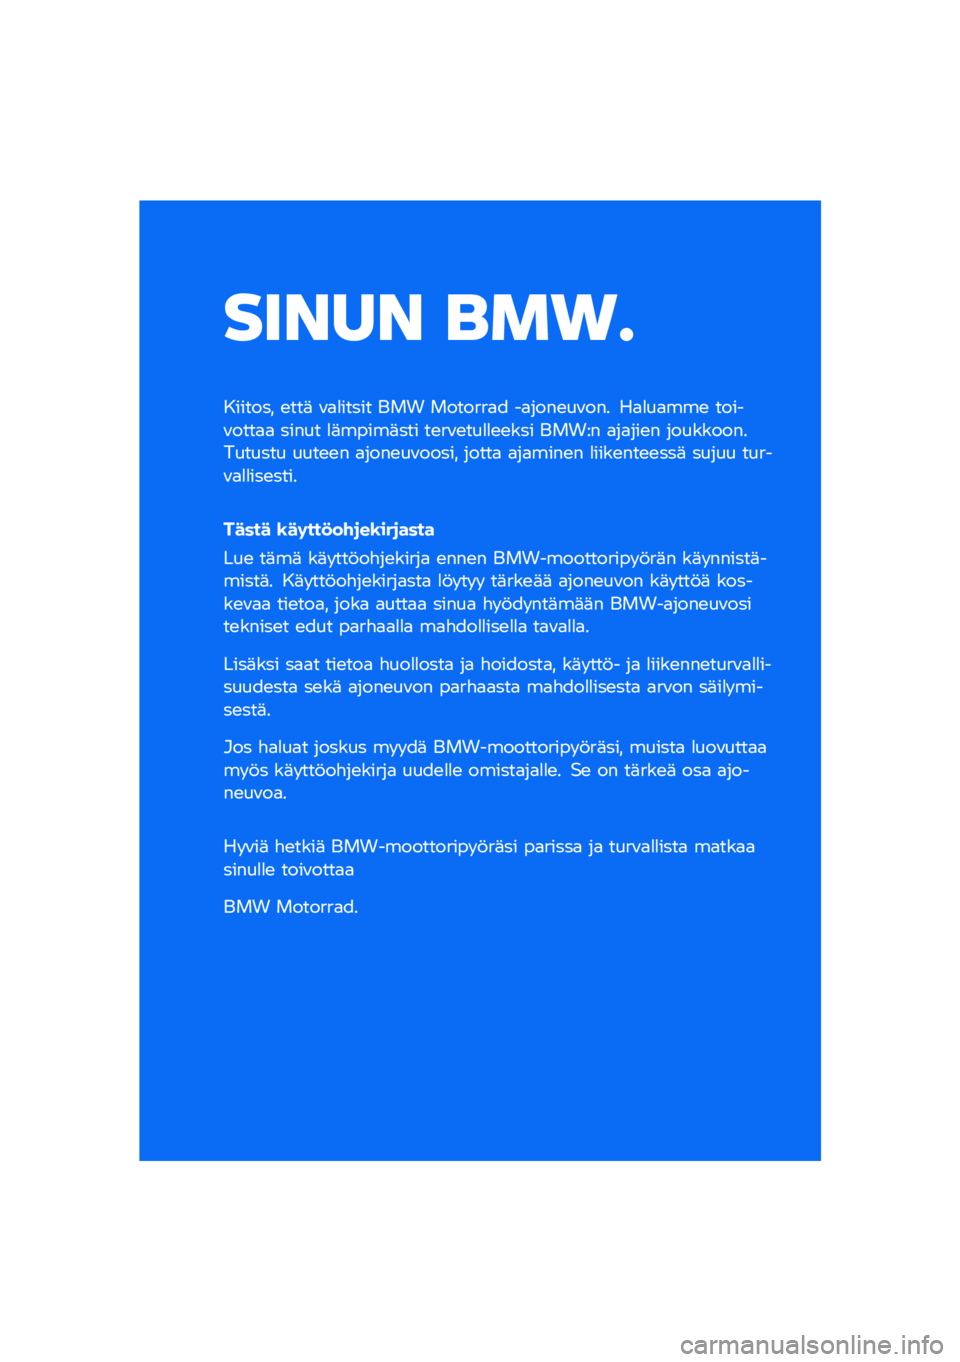 BMW MOTORRAD R NINE T URVAN G/S 2021  Käsikirja (in Finnish) ����� ���\b�	
������� �\b���	 �\f�
�
����� ��� �������
� ��
����\b��\f��� ��
�
��
���\b �����\f����
�
 ����� �
�	�����	��� ��\b��\f�\b�